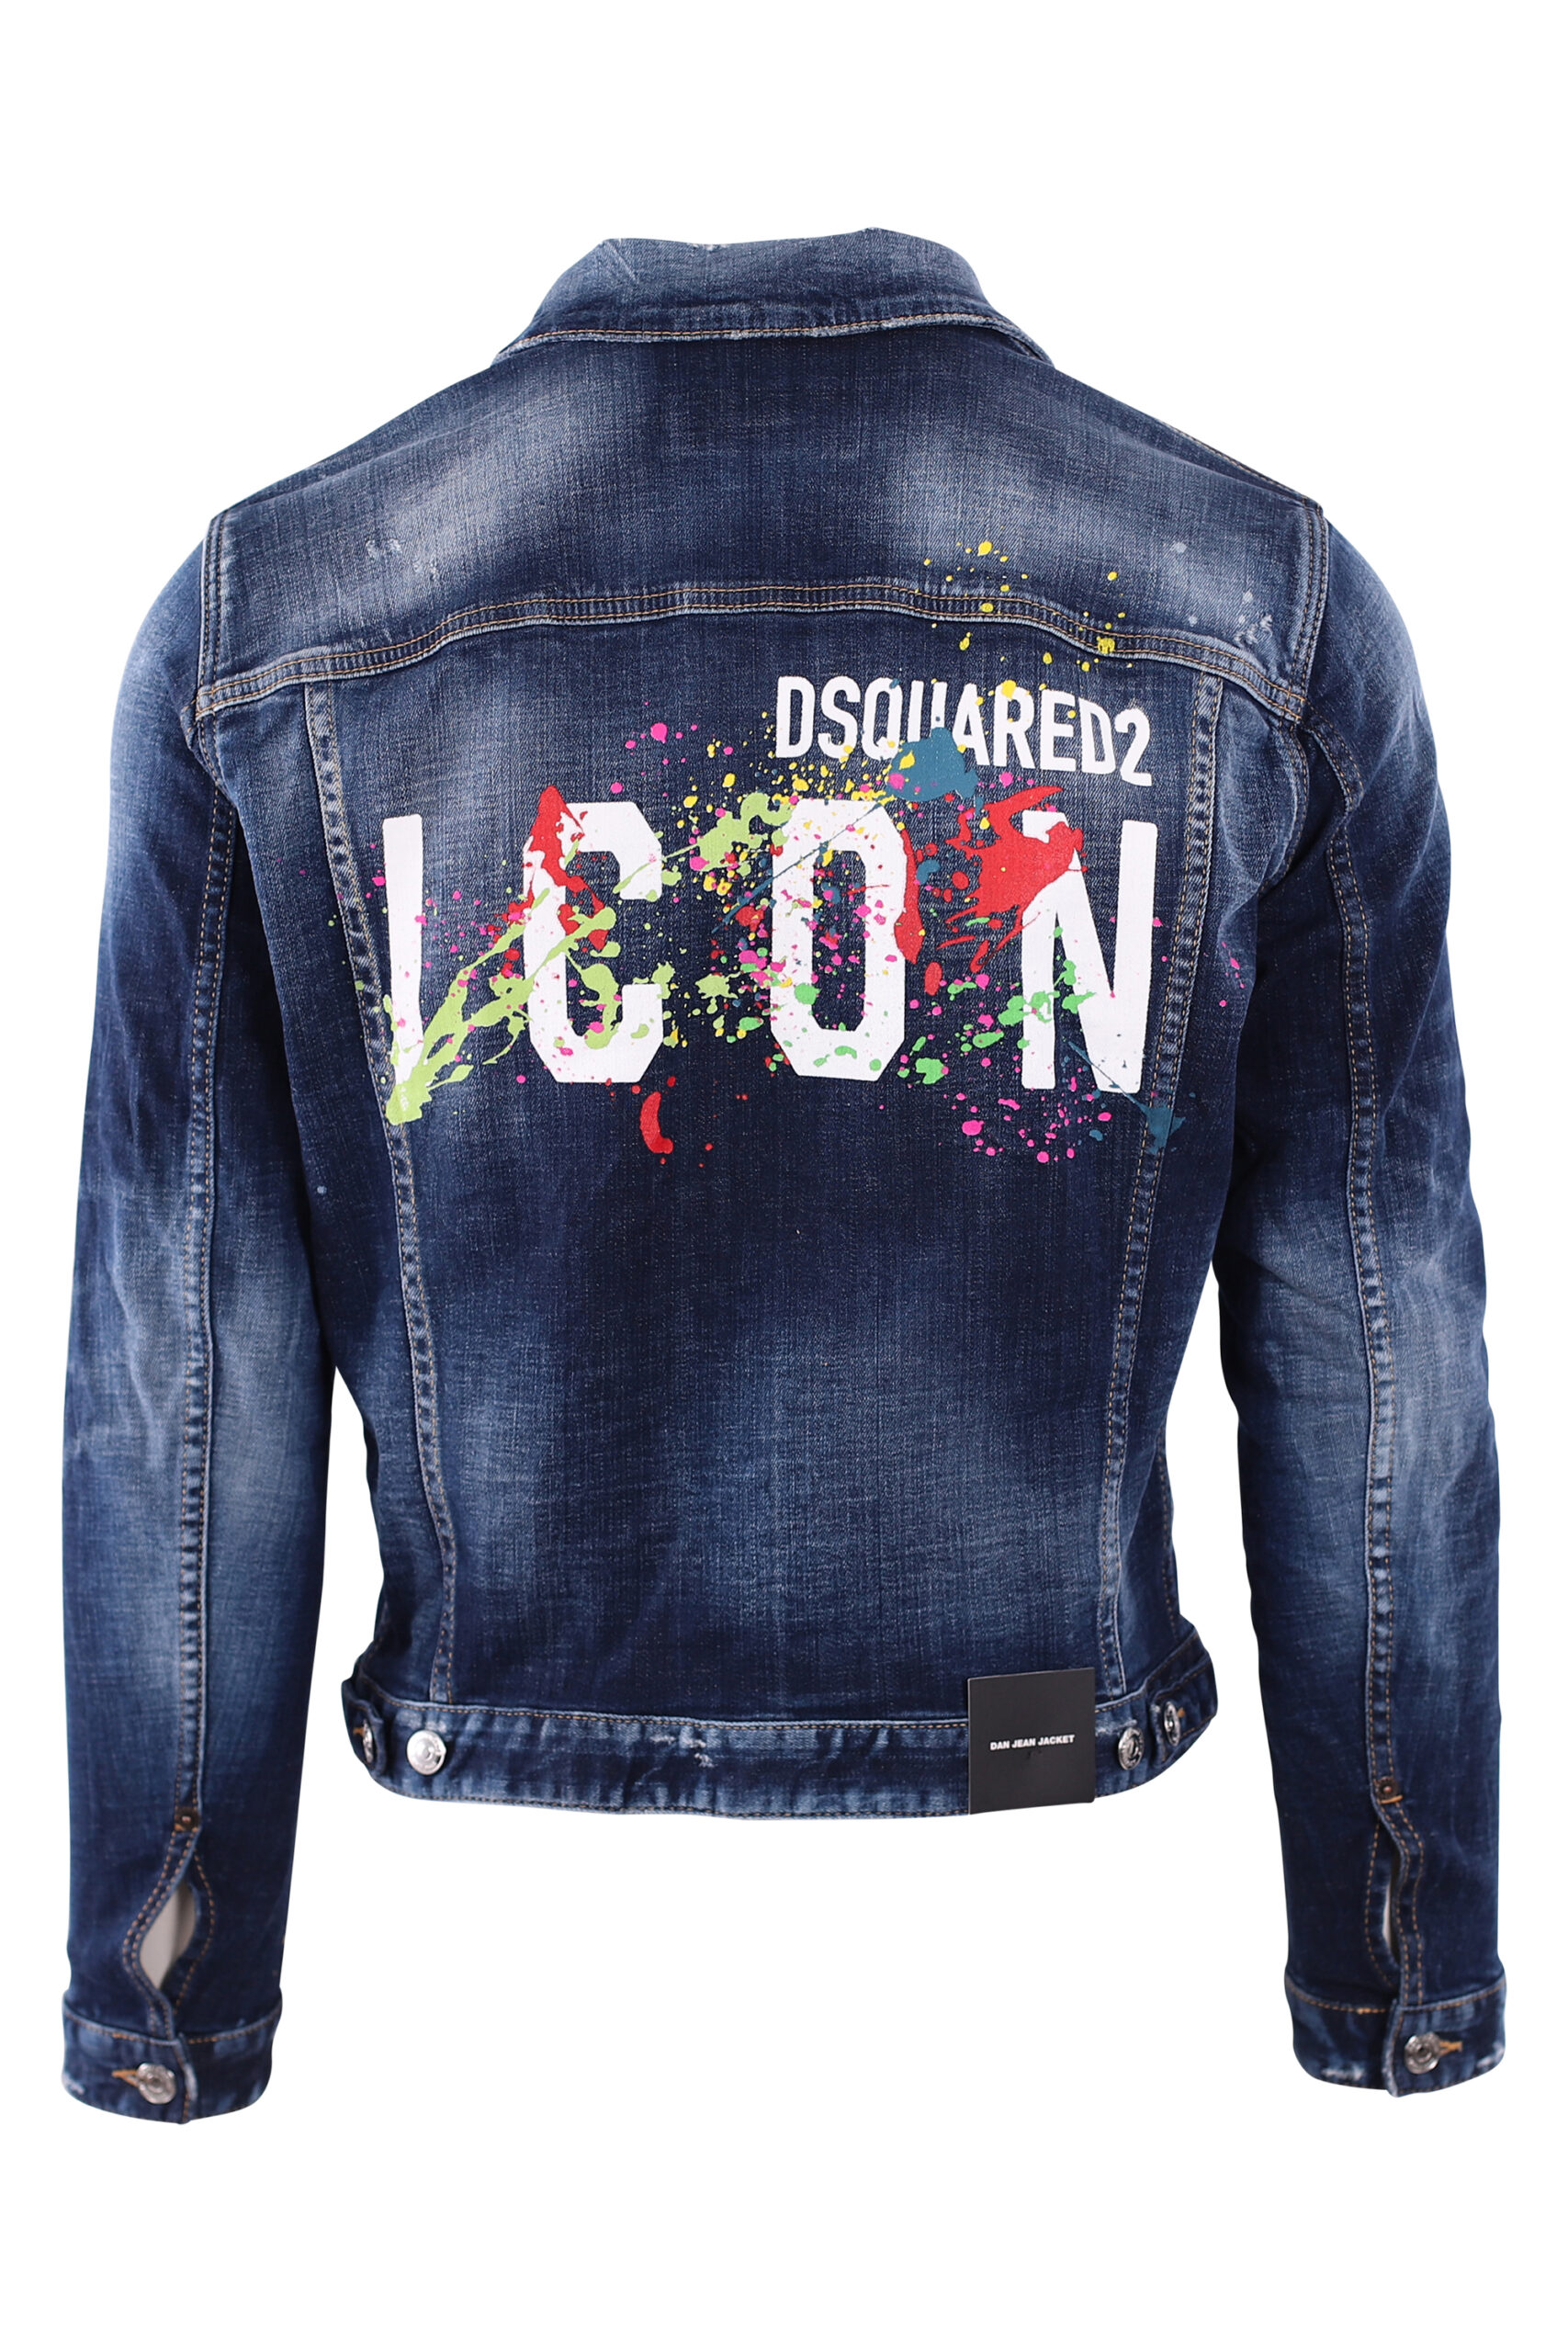 Dsquared2 - Blue denim jacket with "Icon splash" - BLS Fashion